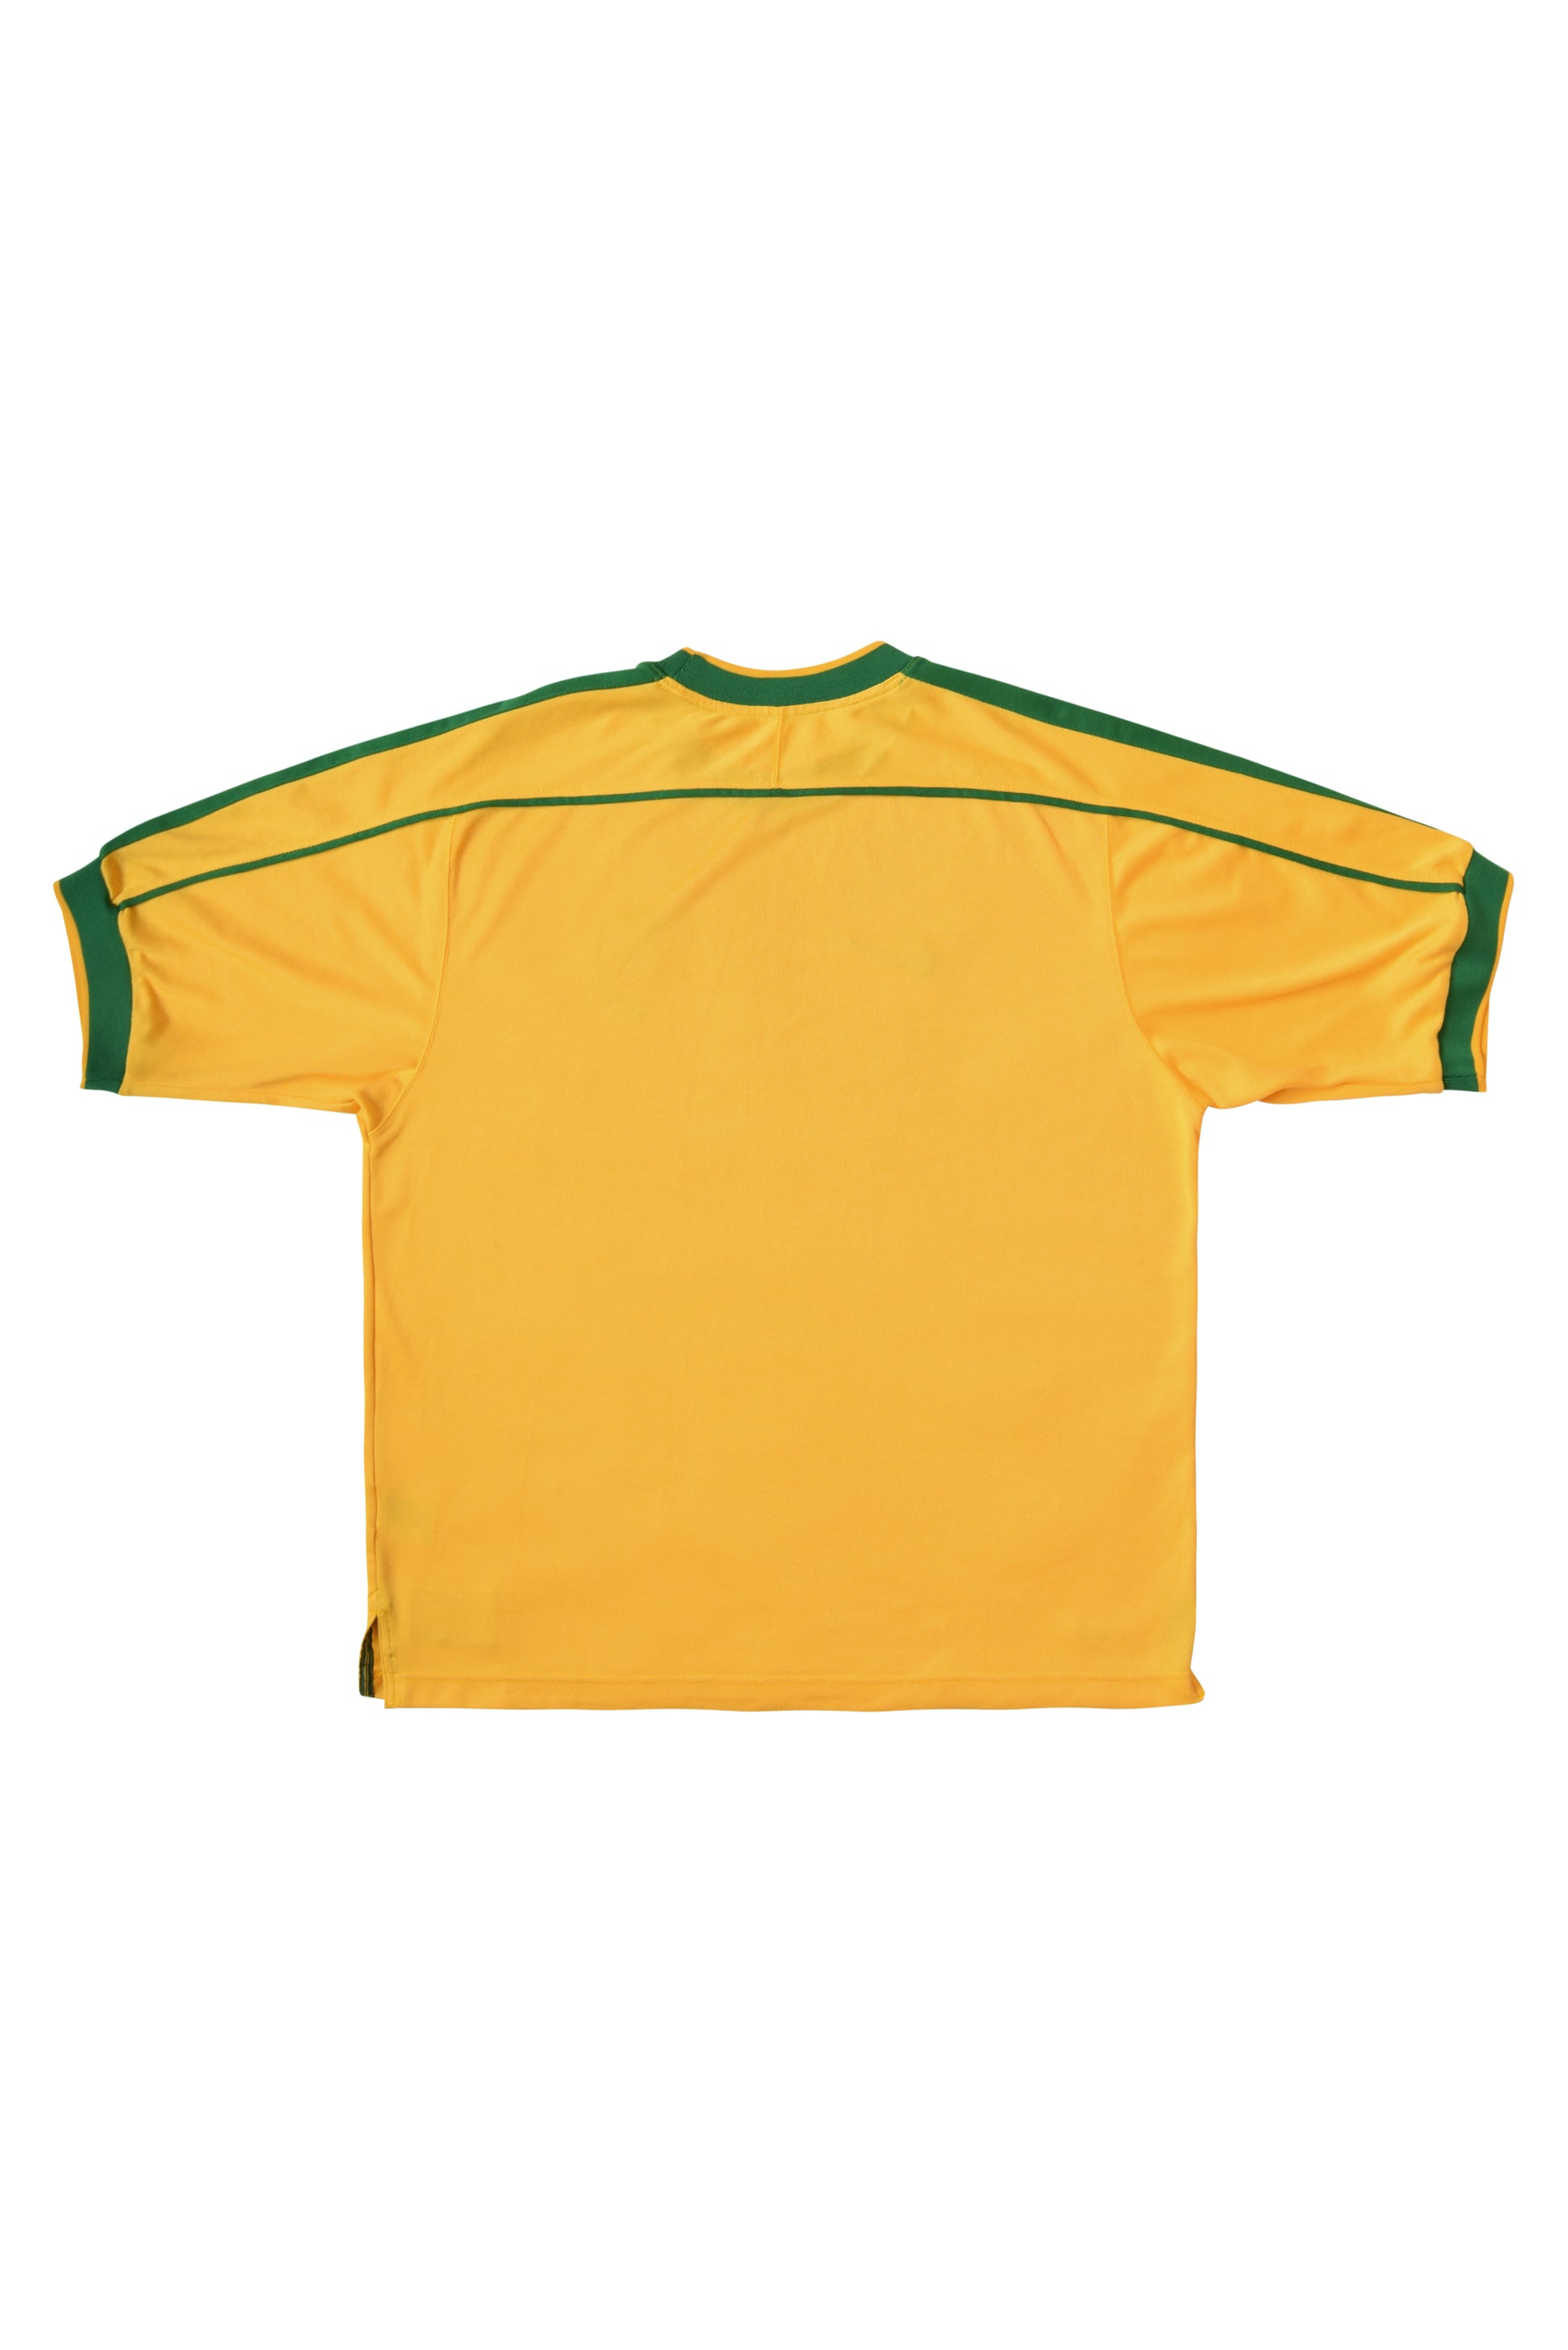 Vintage Nike Brazil 1998 - 2000 Home Football Shirt Size L